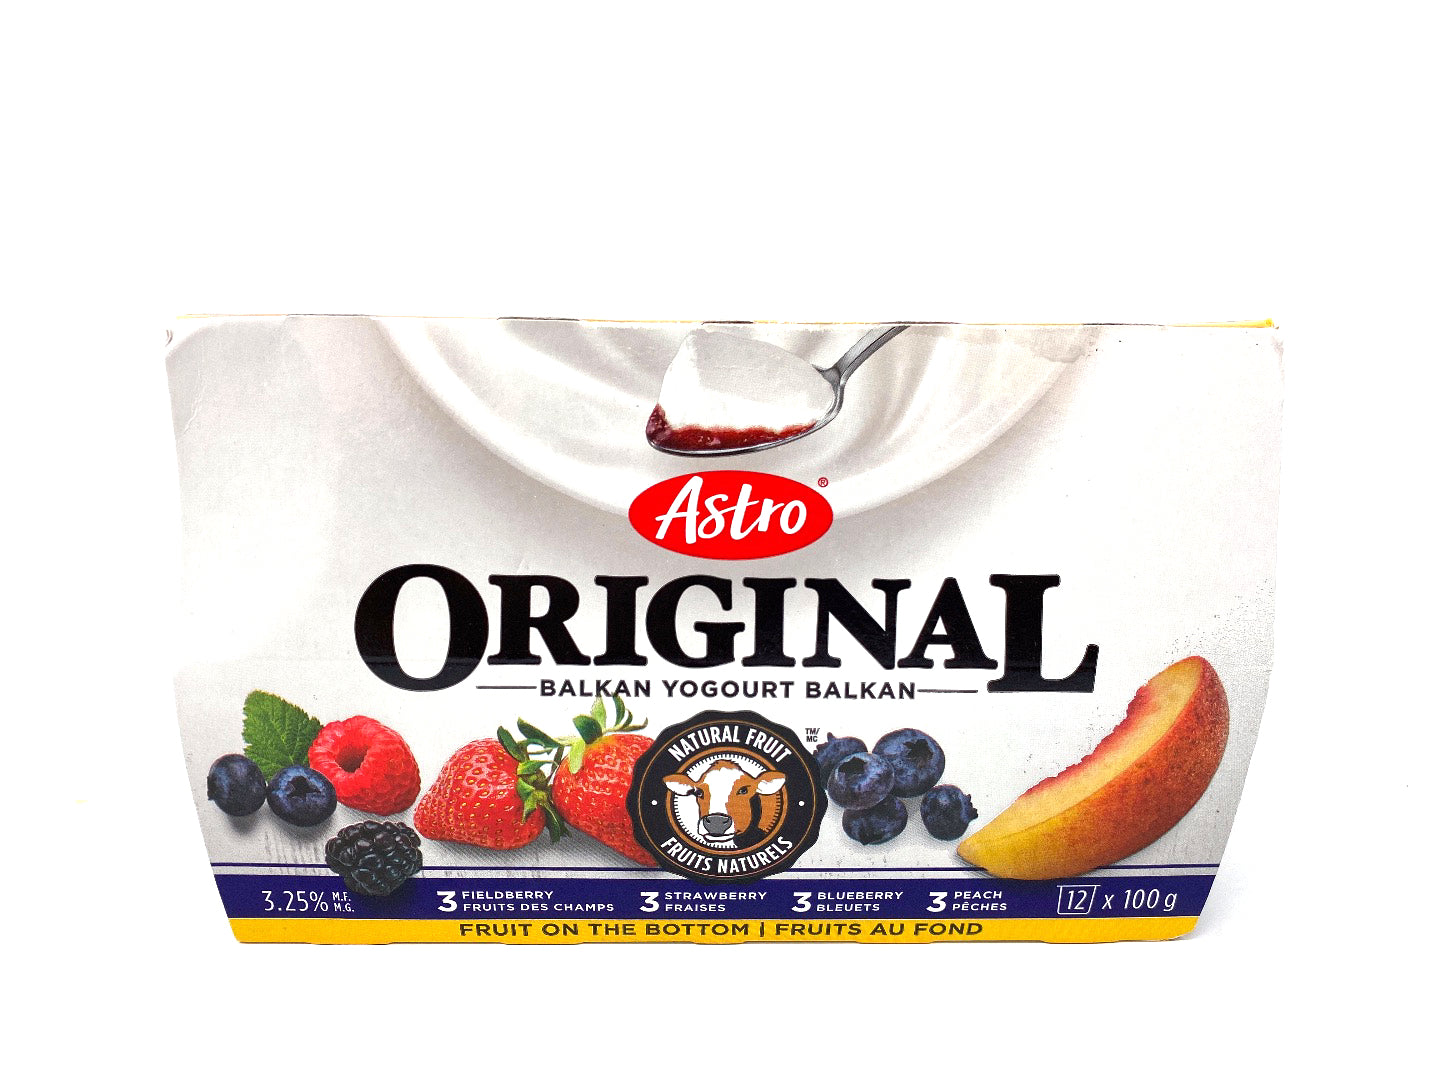 Astro Original Balkan Yogourt